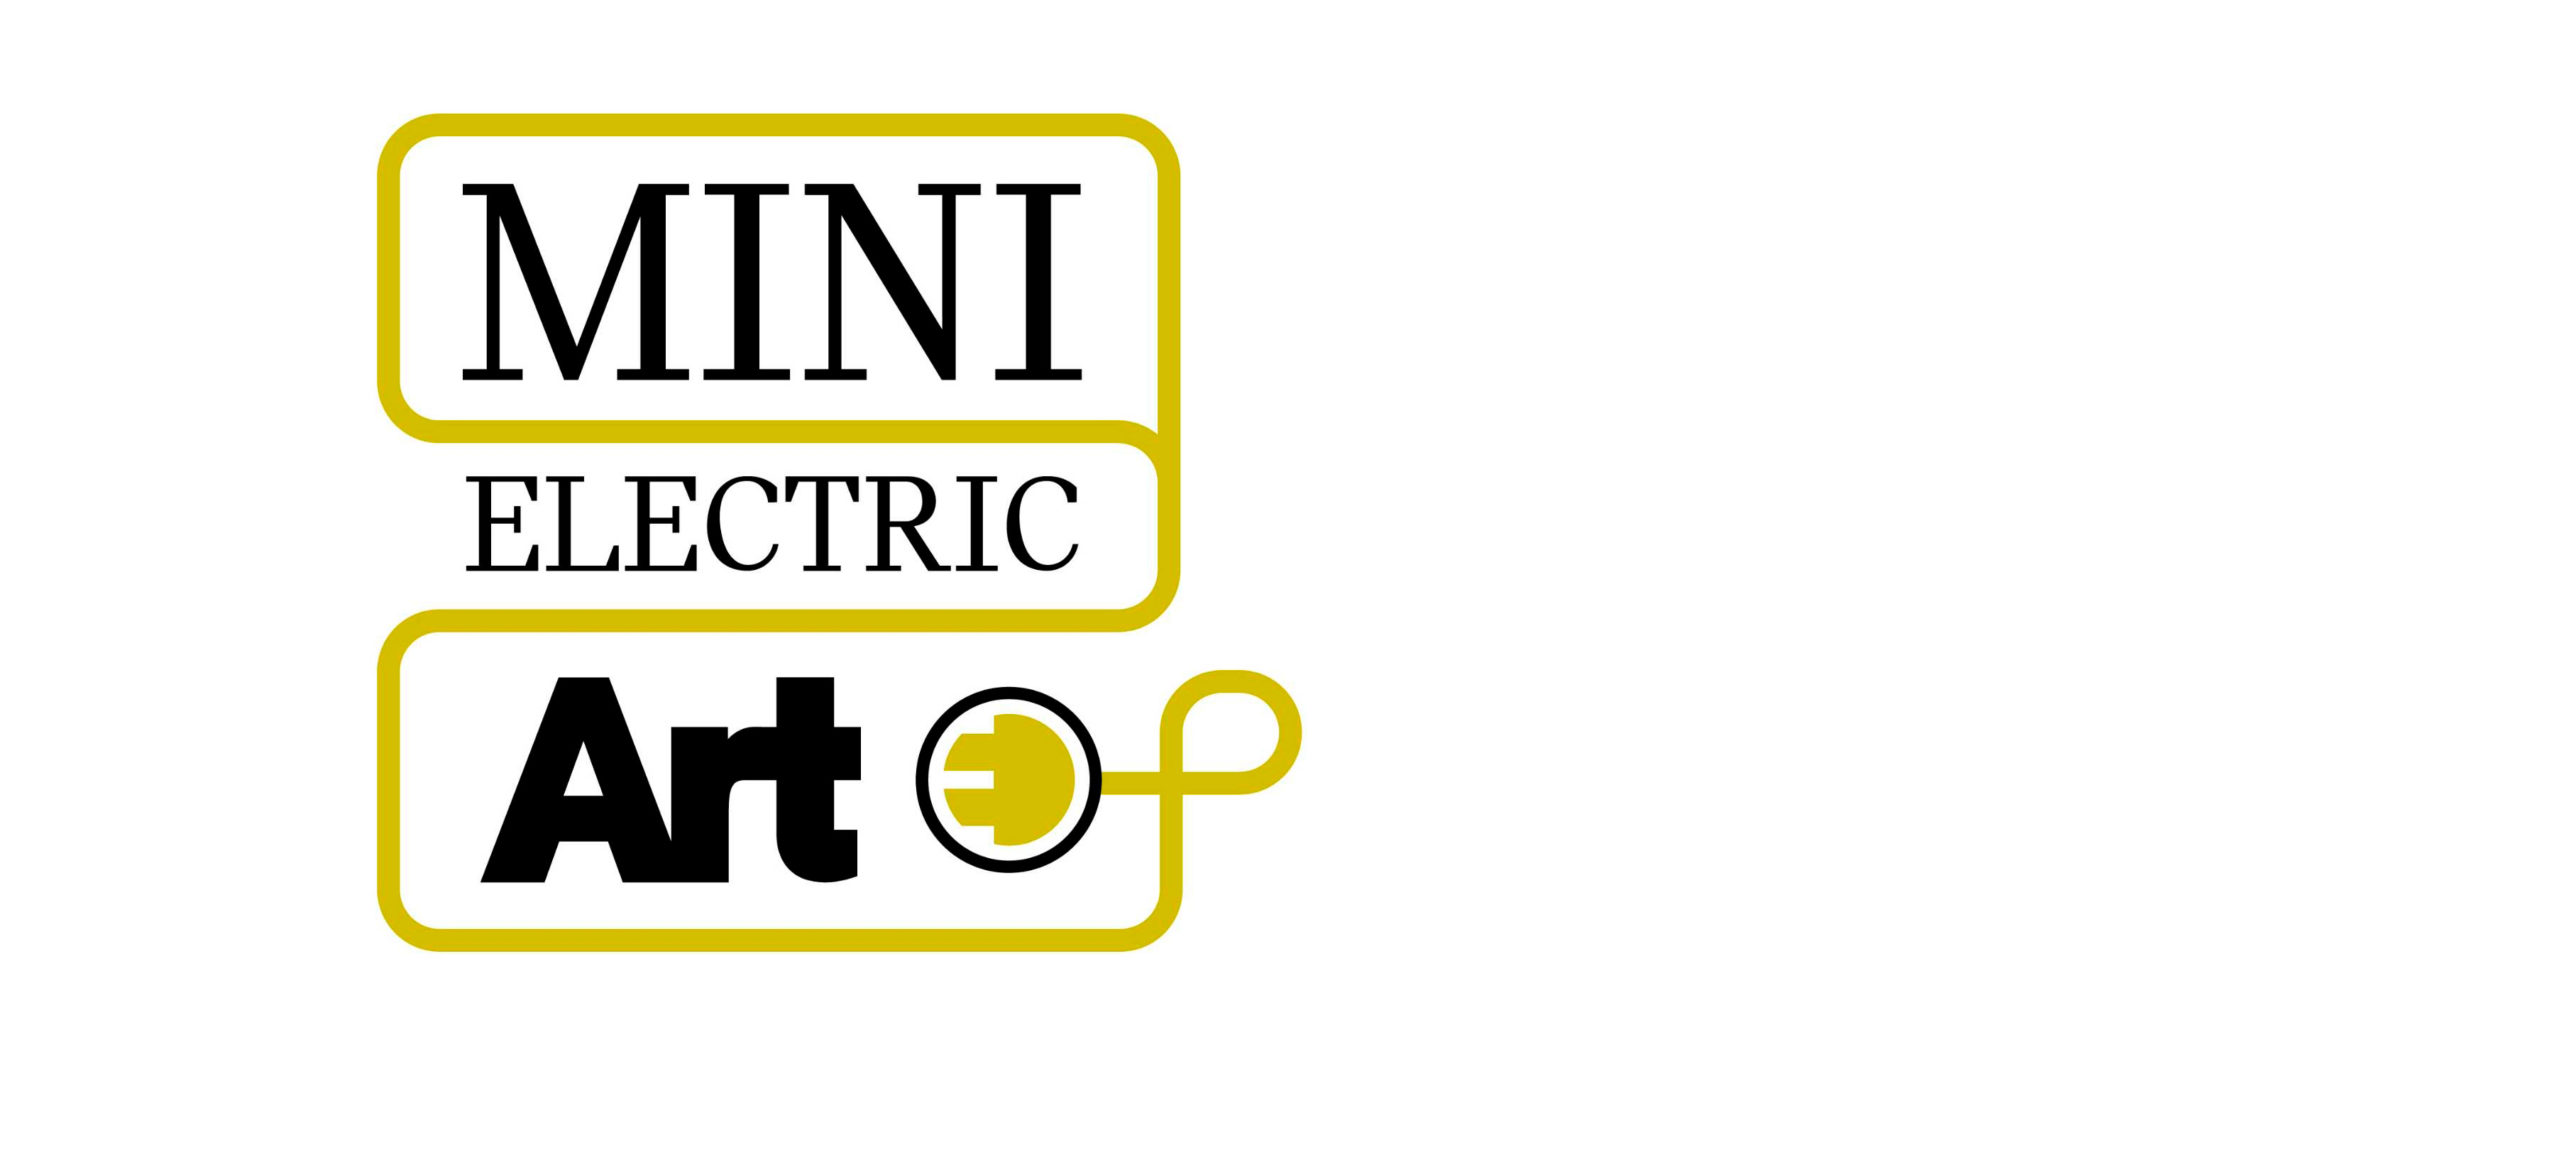 MINI España, gracias a su submarca MINI Electric, iluminará Madrid